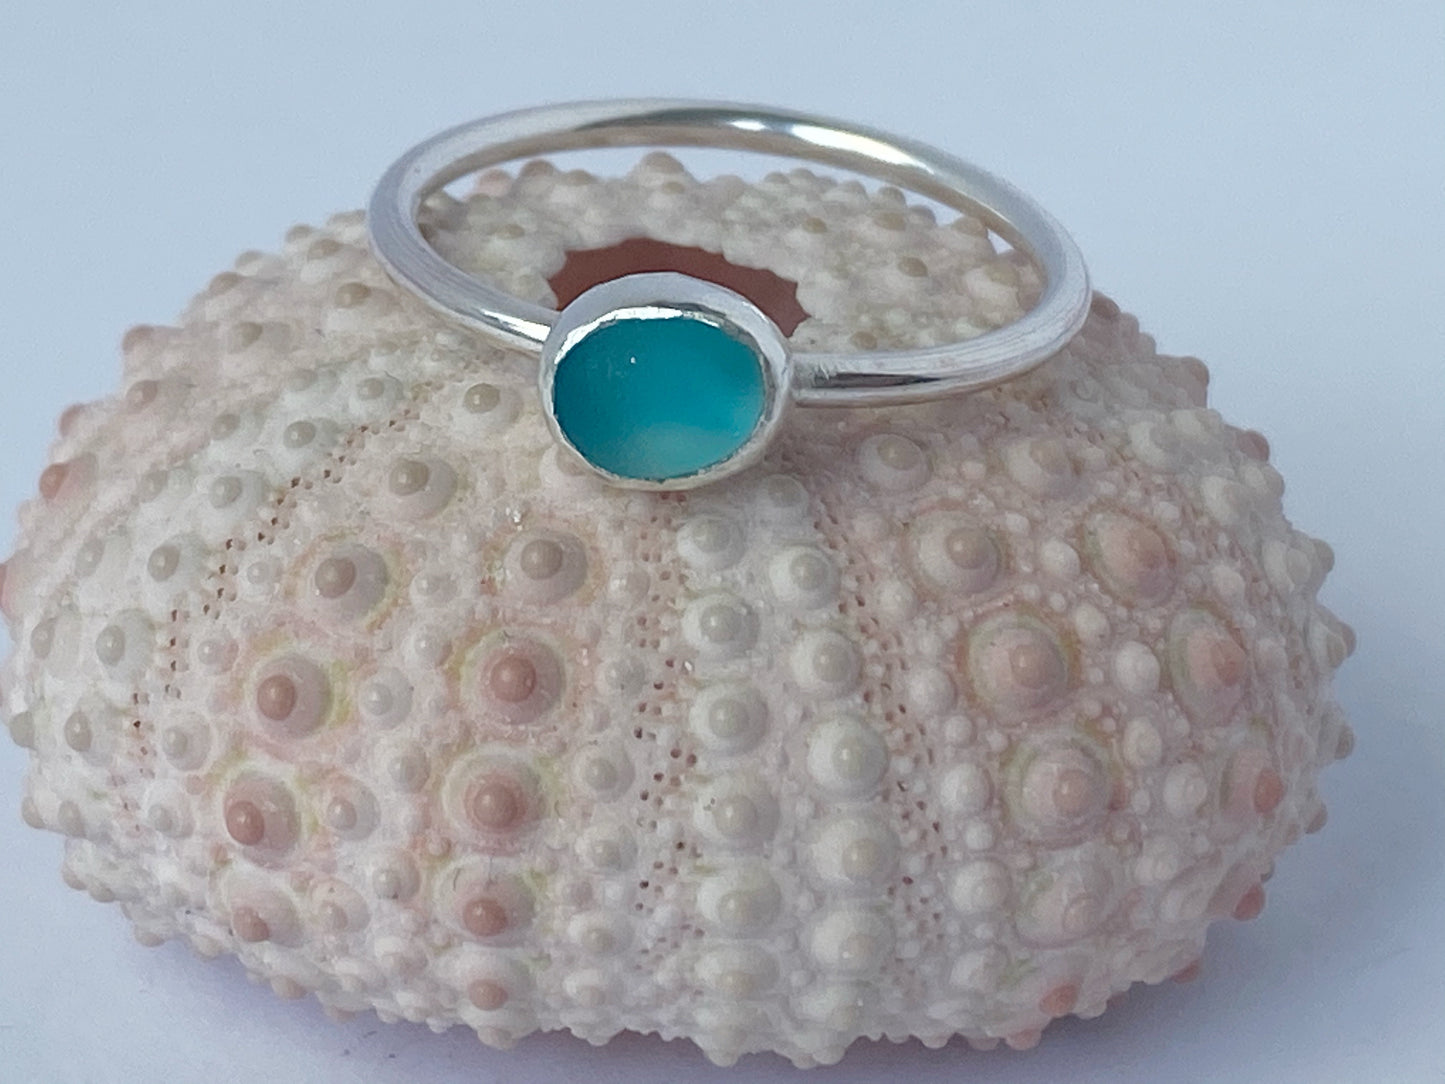 Aquamarine Blue Sea glass Ring